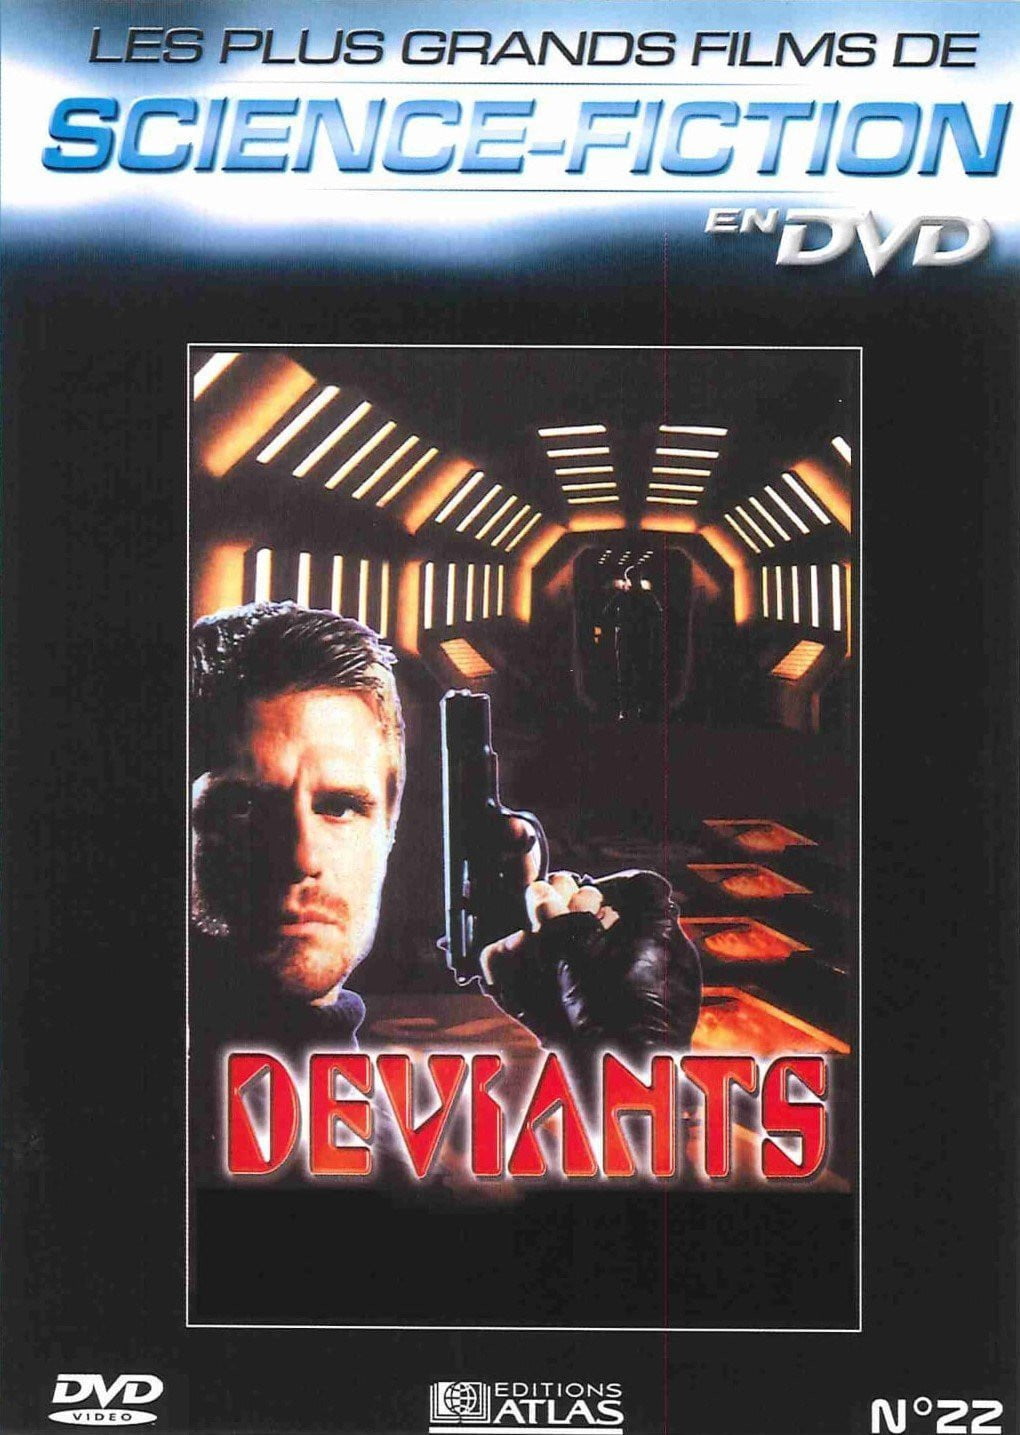 flashvideofilm - Deviants (1997) - DVD - DVD